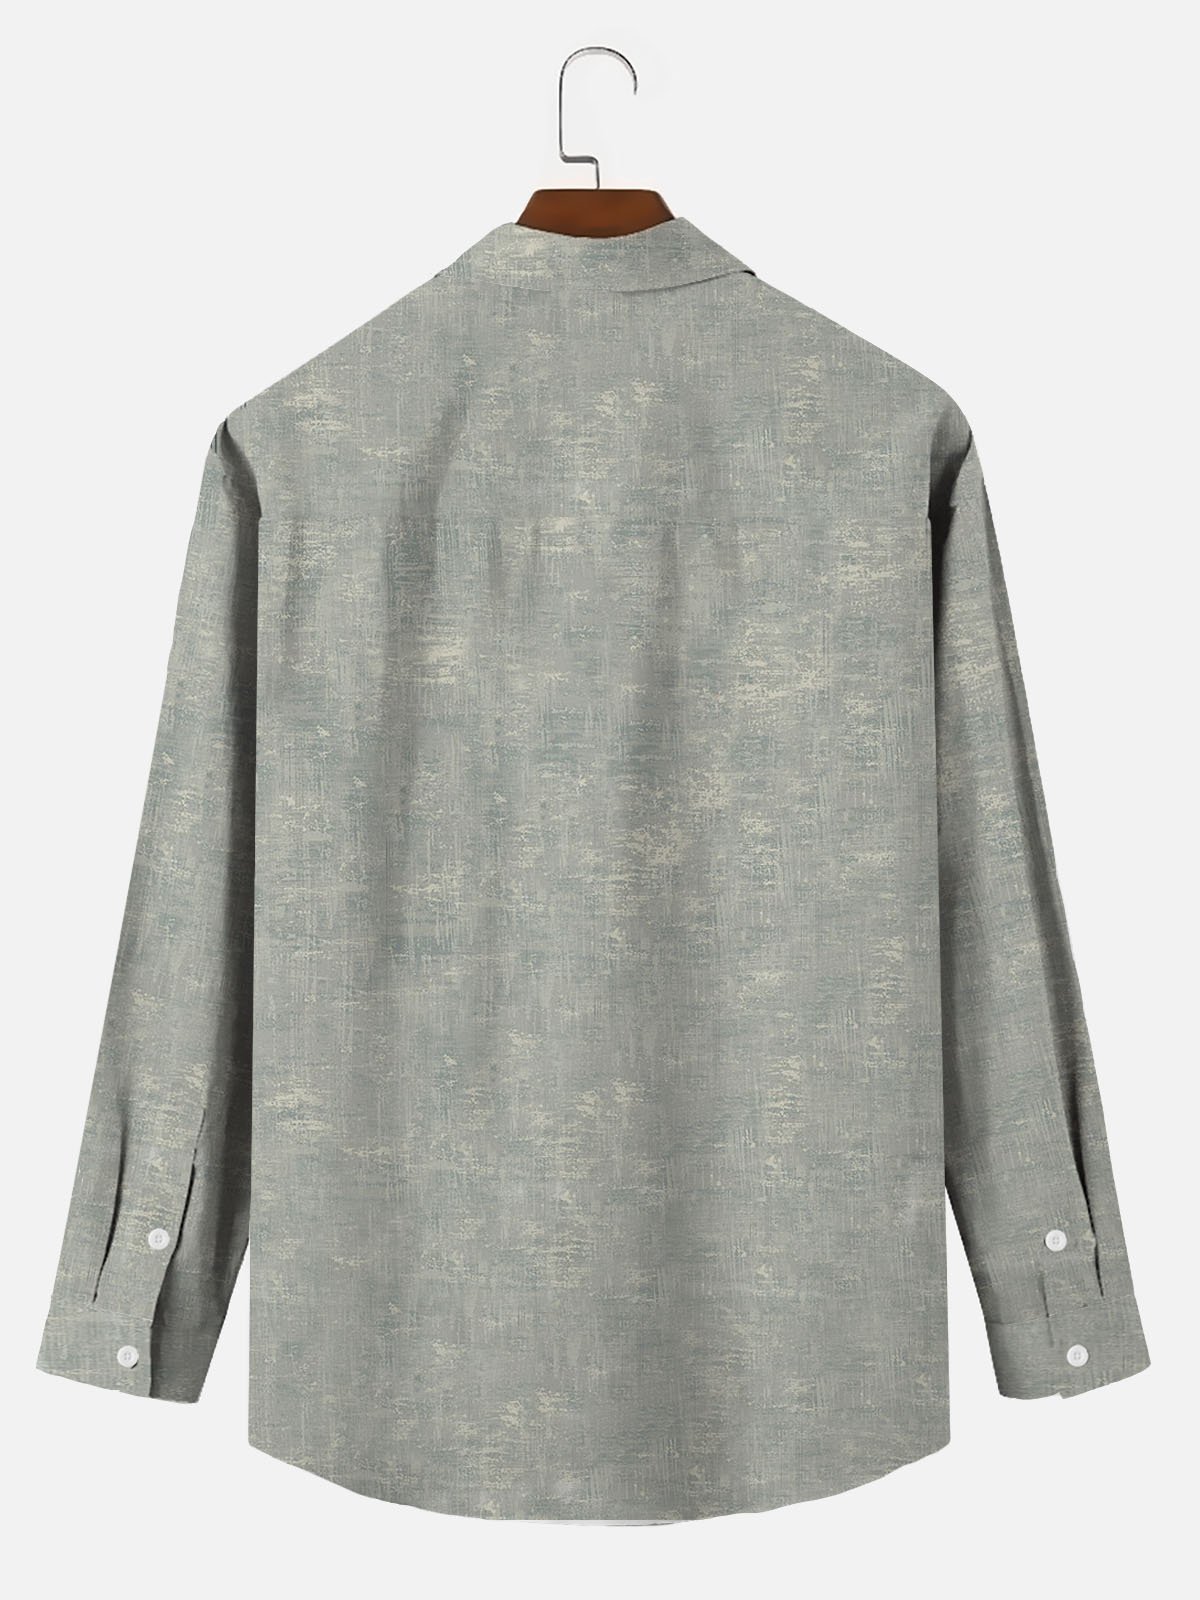 Retro Stripe Texture Printing Men's Long Sleeve Shirt Natural Fiber Plus Size Shirt